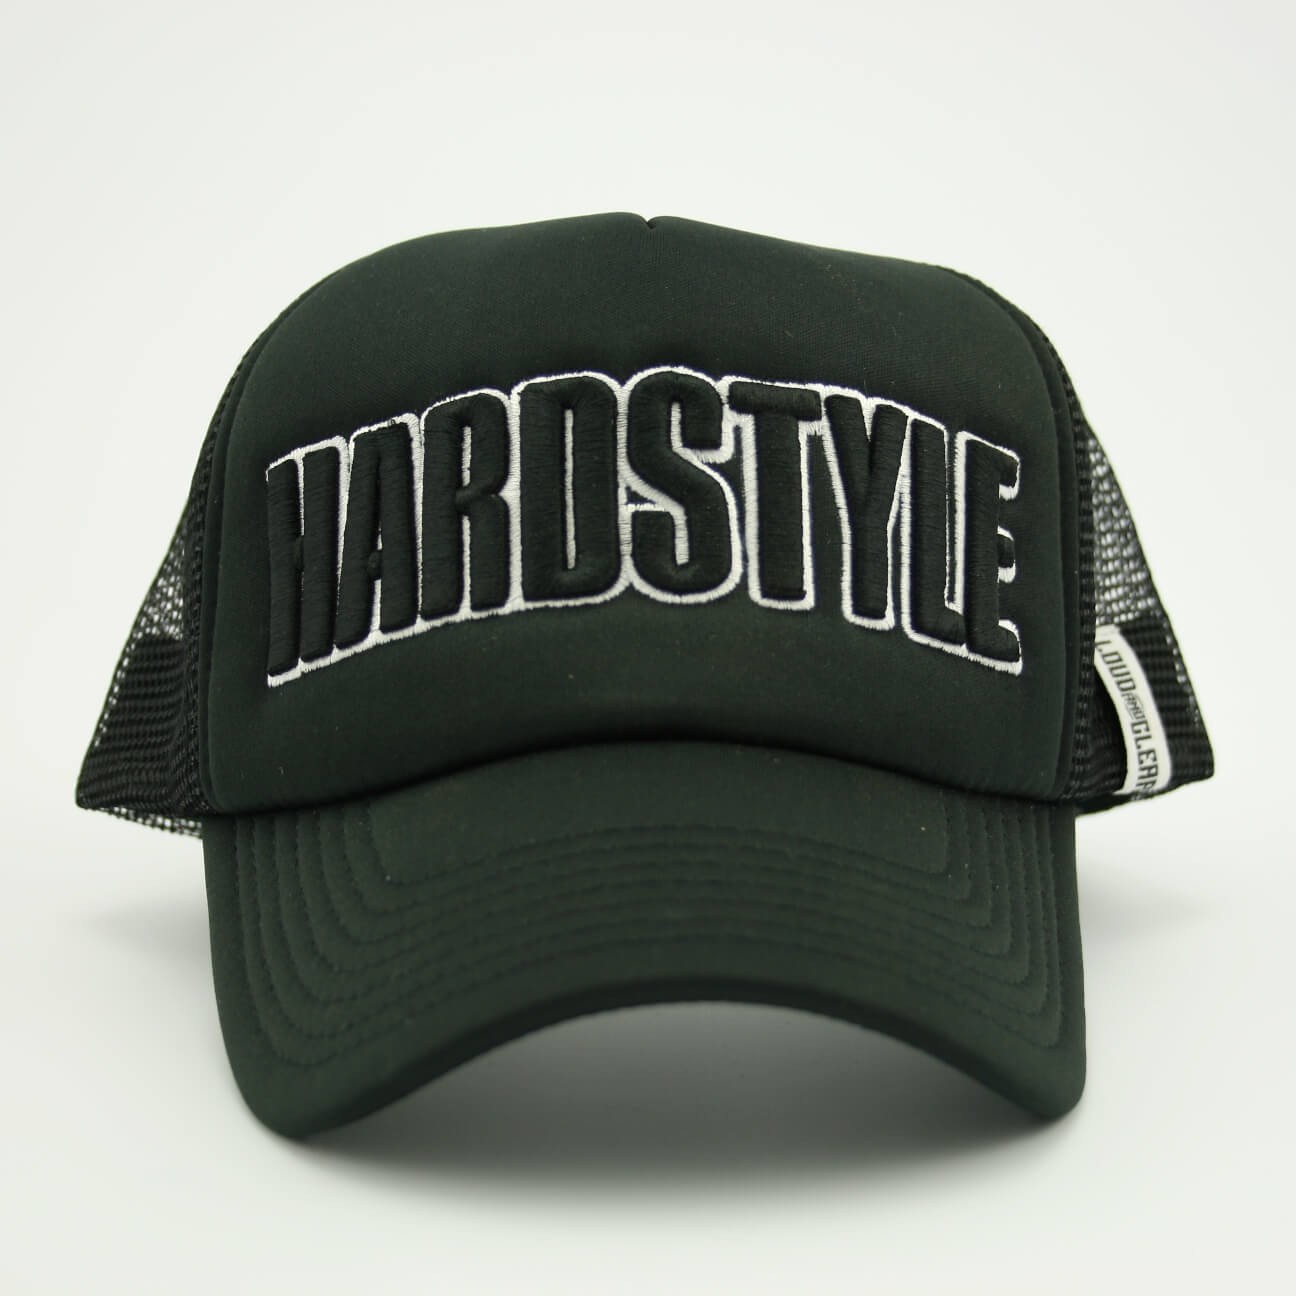 Festival Hardstyle cap, Hardcore